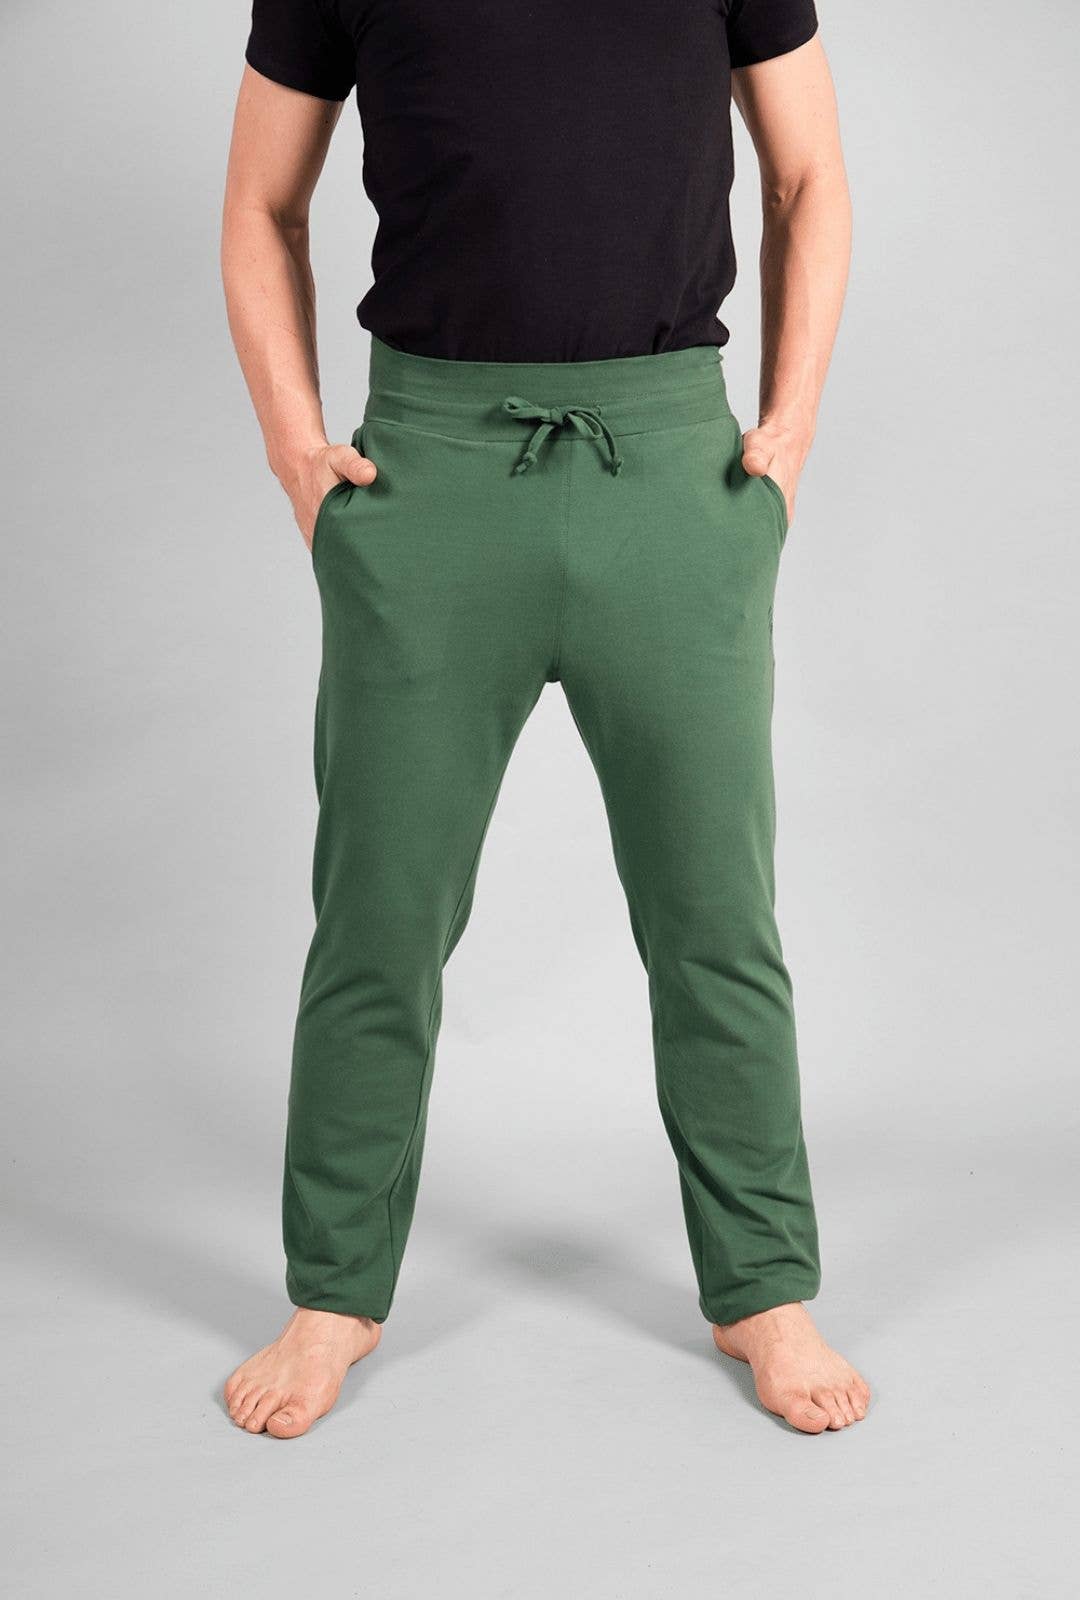 Pantalon de Yoga Homme Mahan - Vert forêt